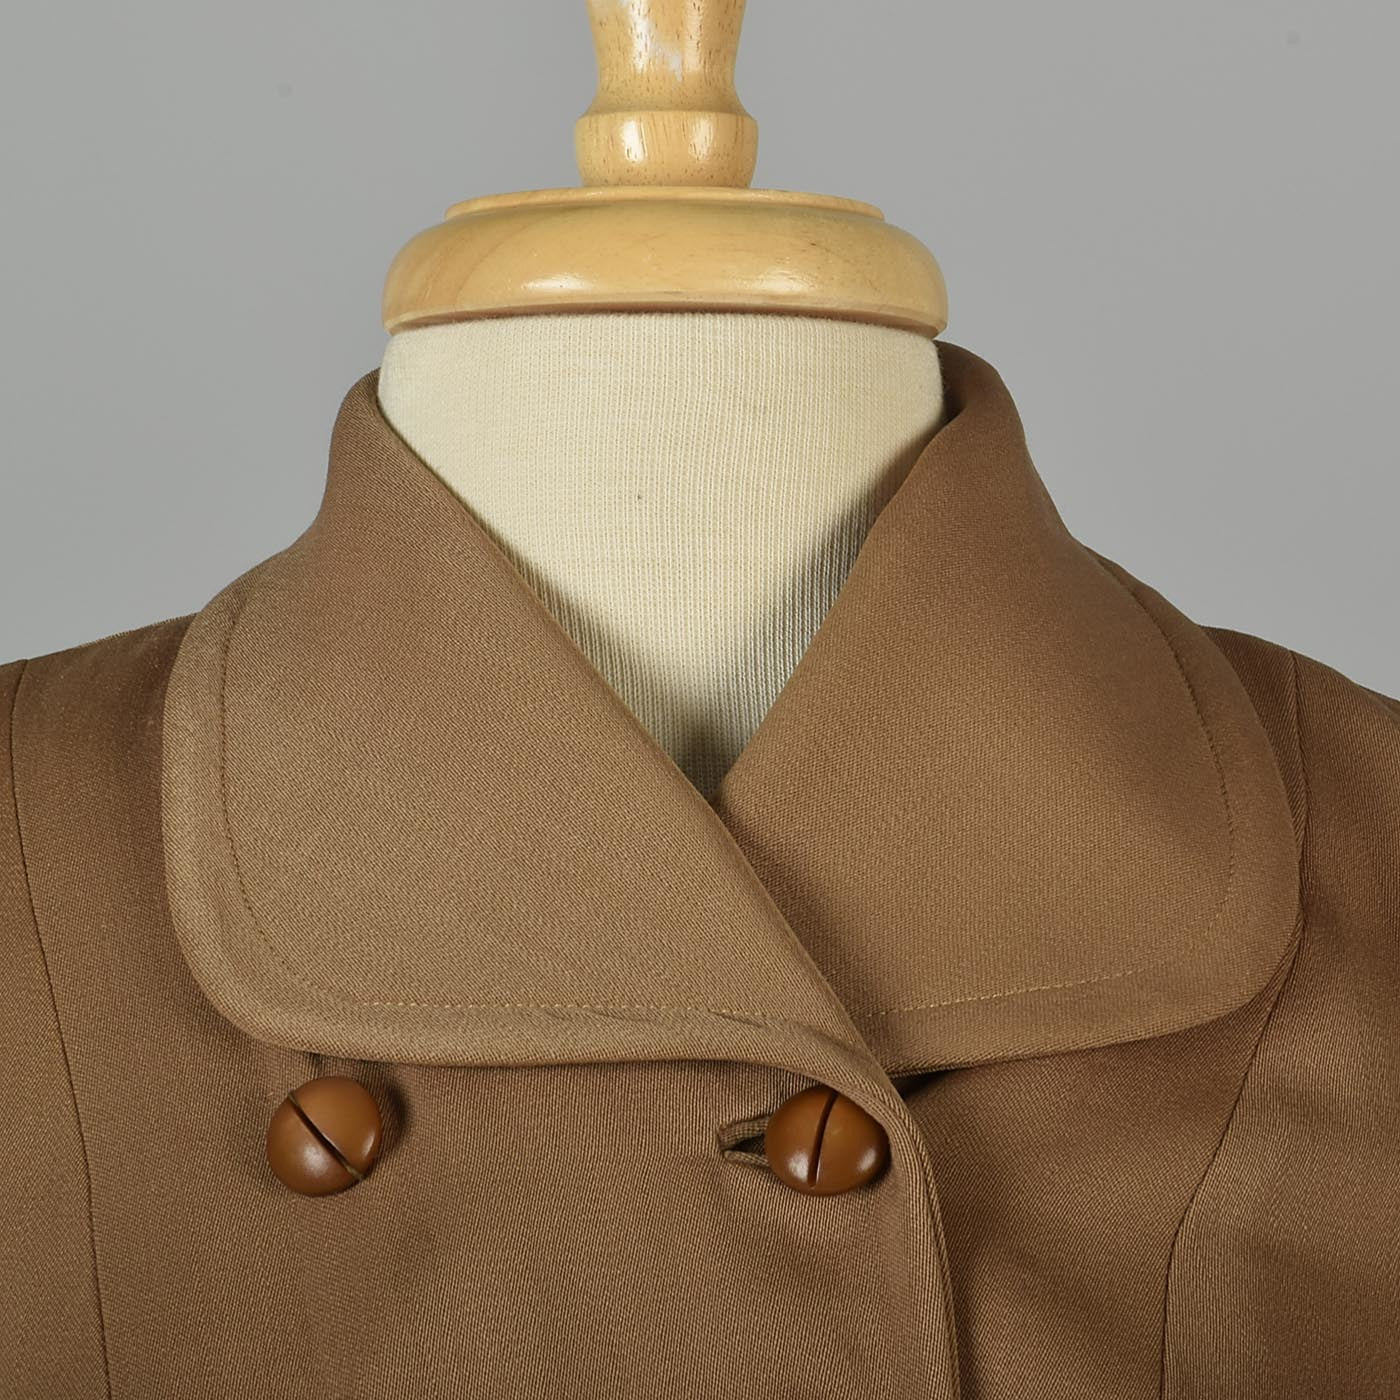 1940s Double Breasted Gabardine Princess Coat